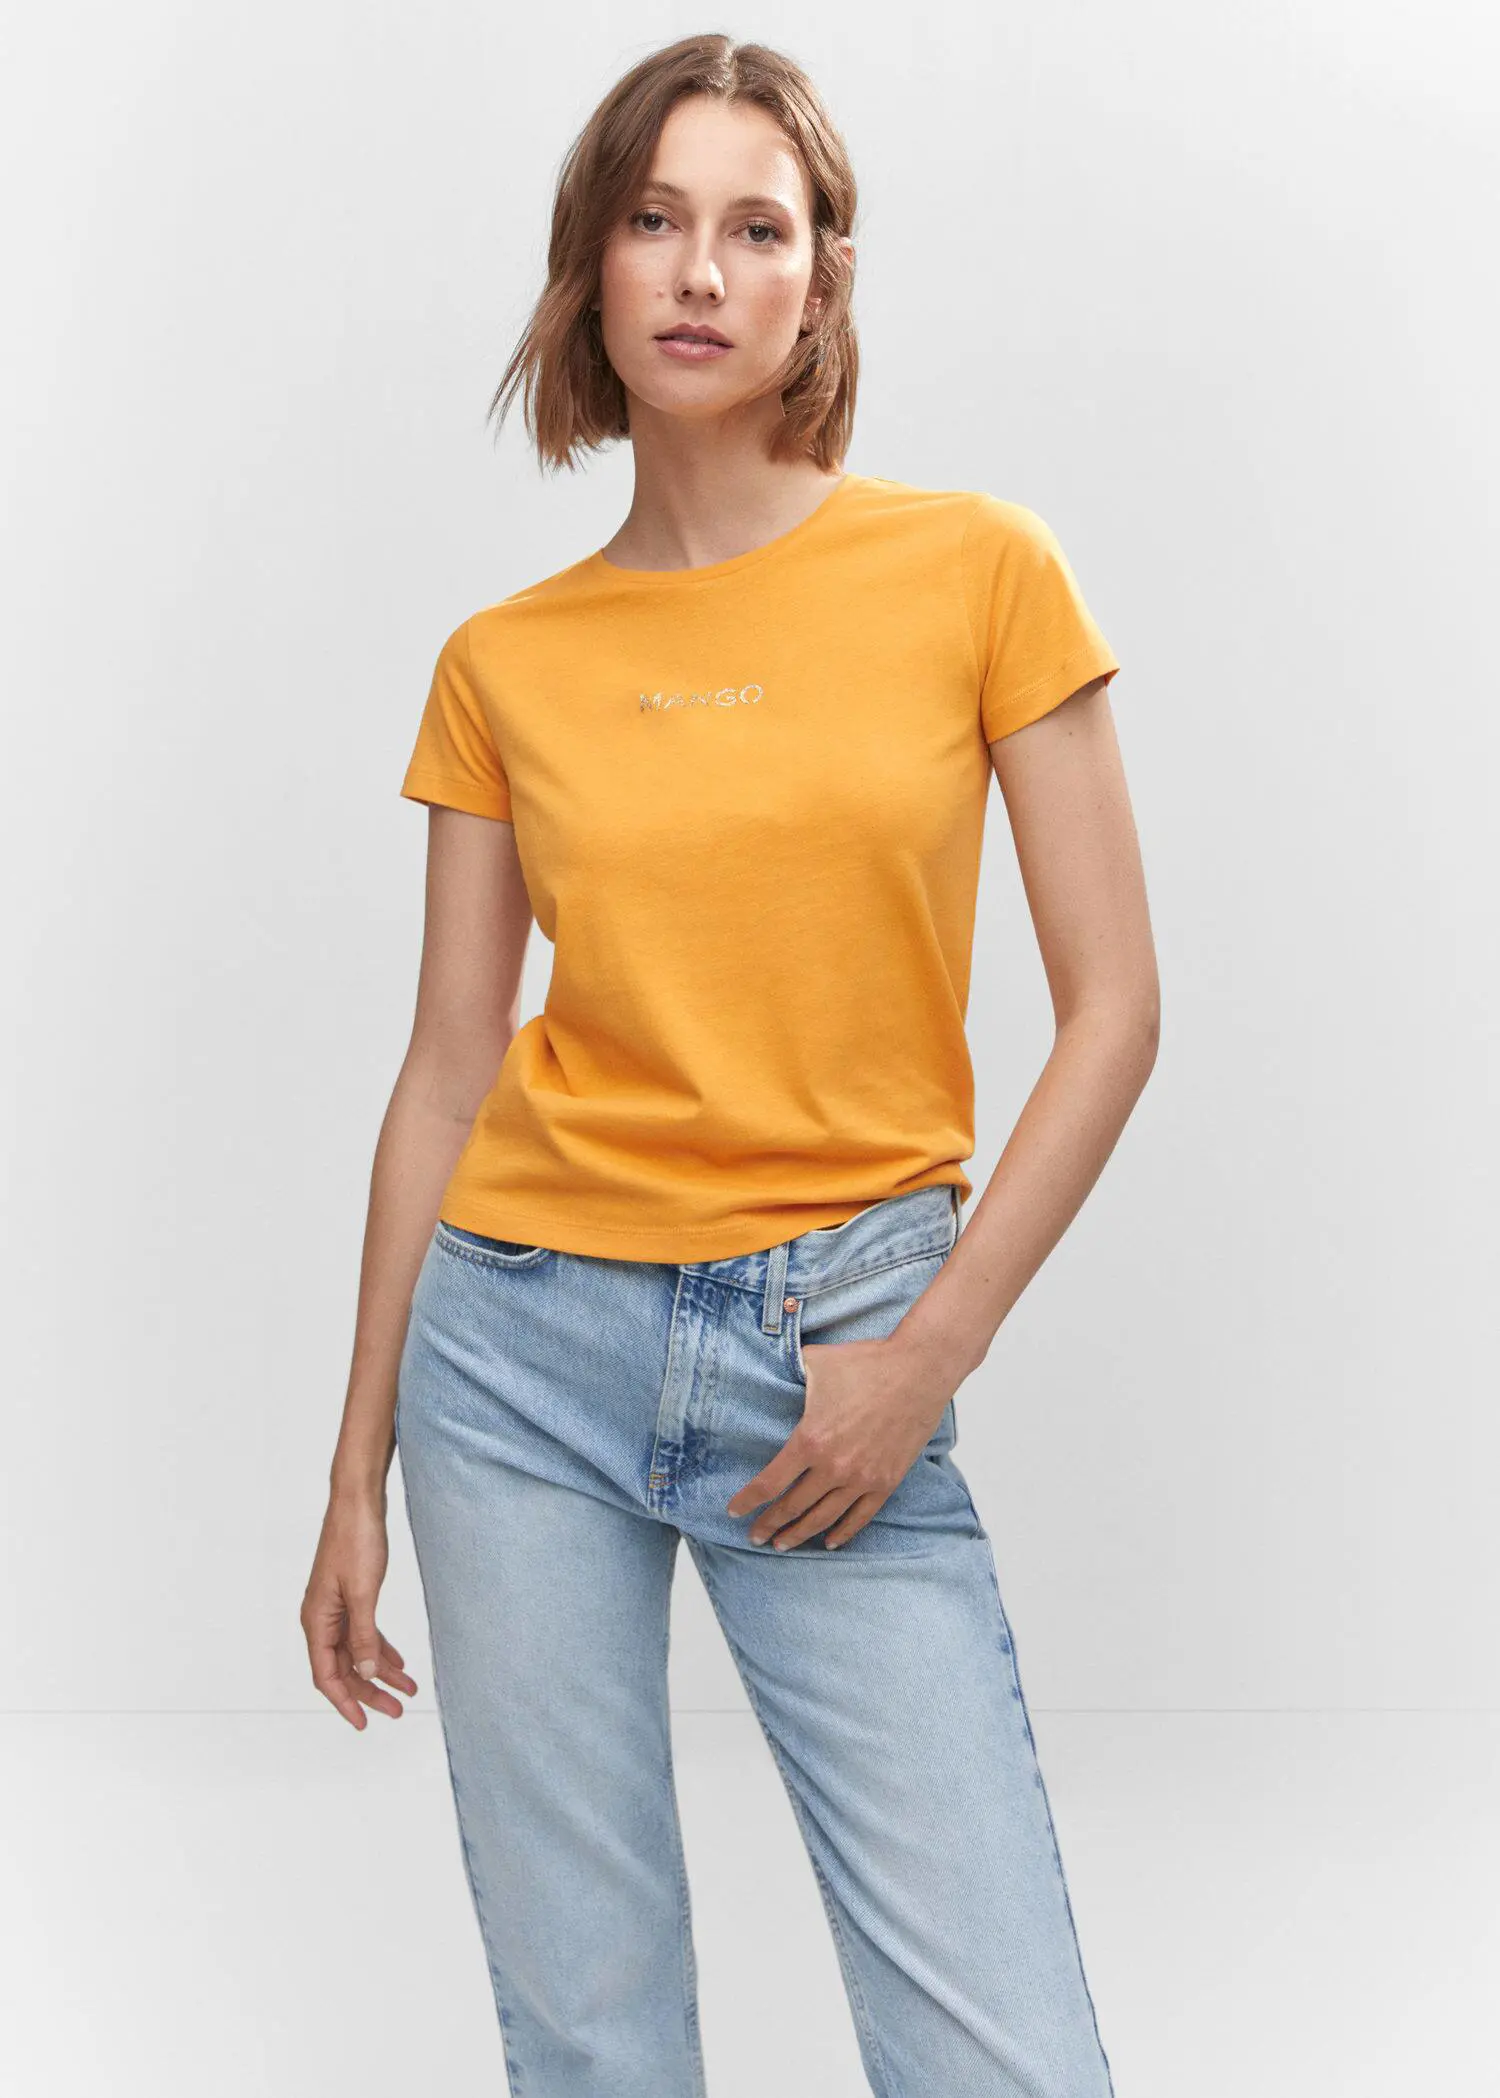 Mango Metallic logo T-shirt. a woman in a yellow t-shirt and jeans. 